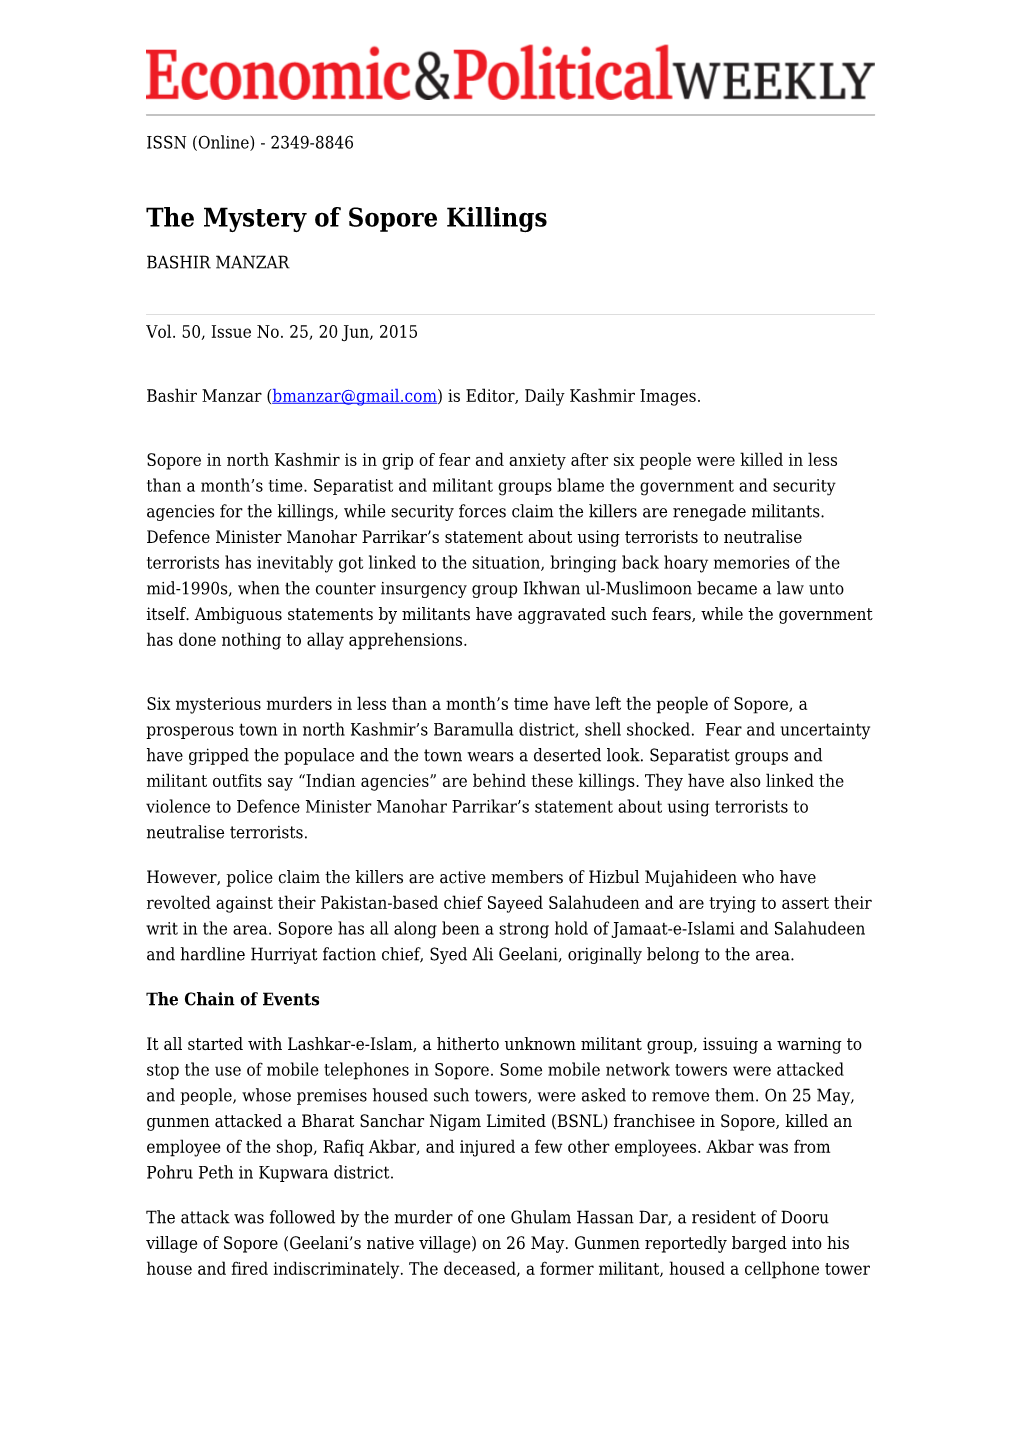 The Mystery of Sopore Killings